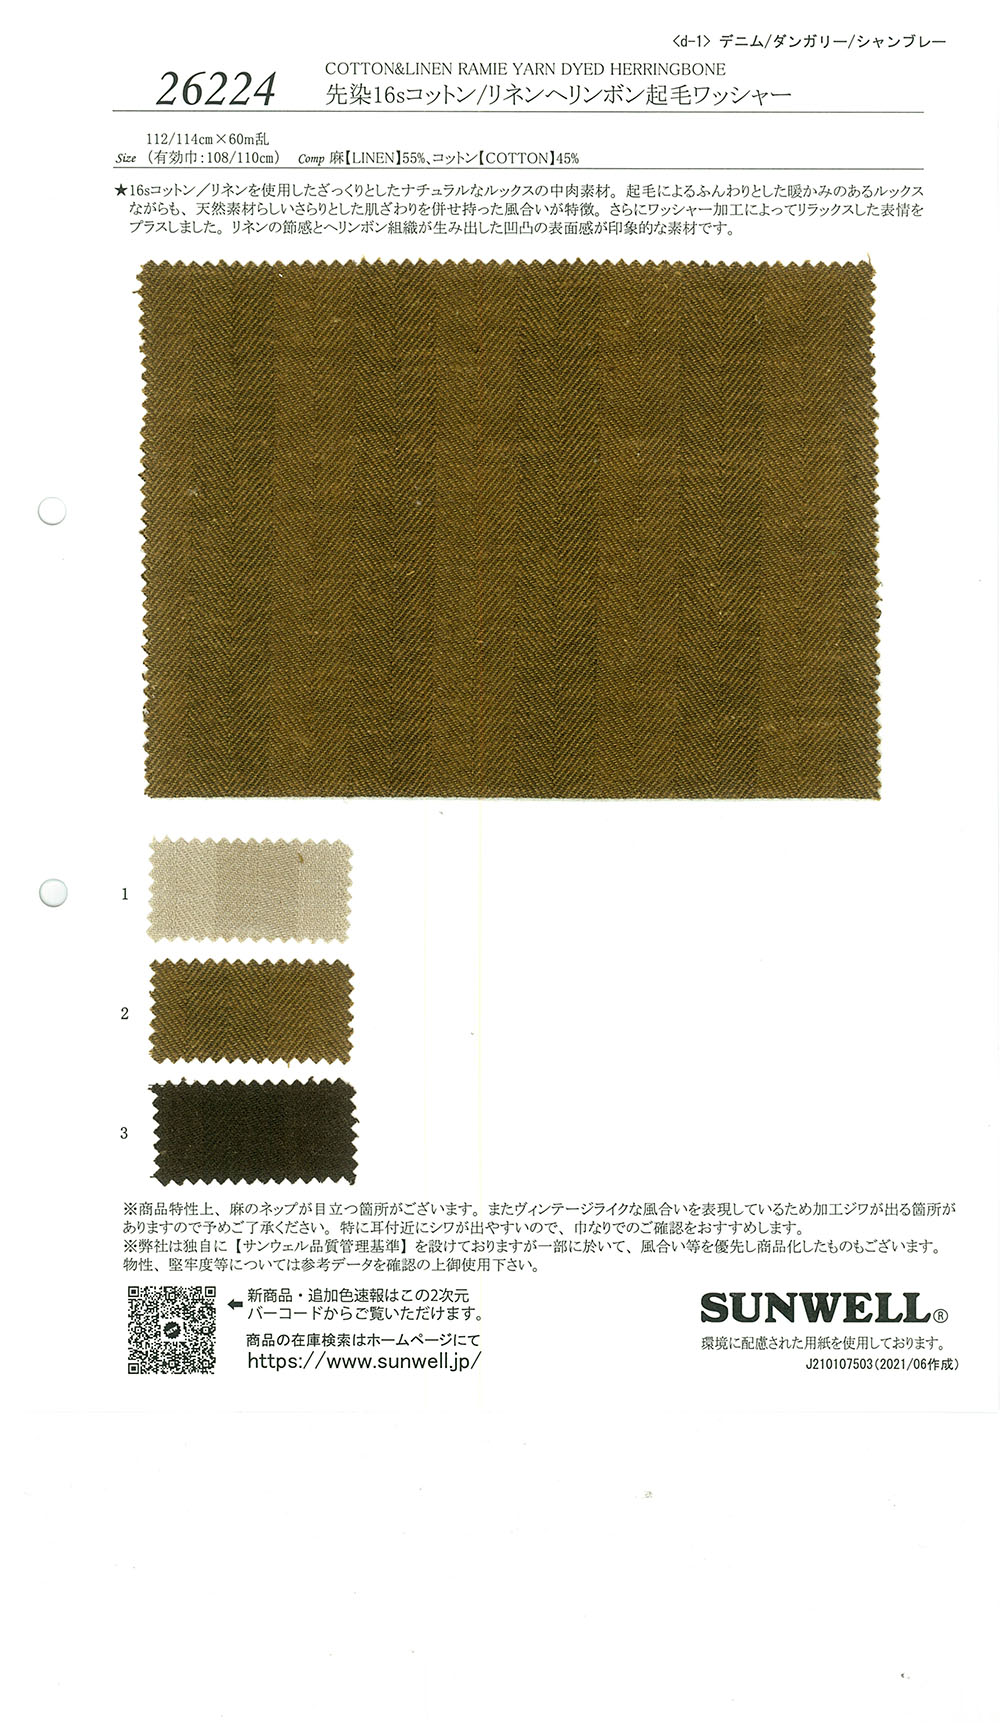 26224 Yarn-dyed 16 Single Thread Cotton/linen Herringbone Fuzzy Washer Processing[Textile / Fabric] SUNWELL